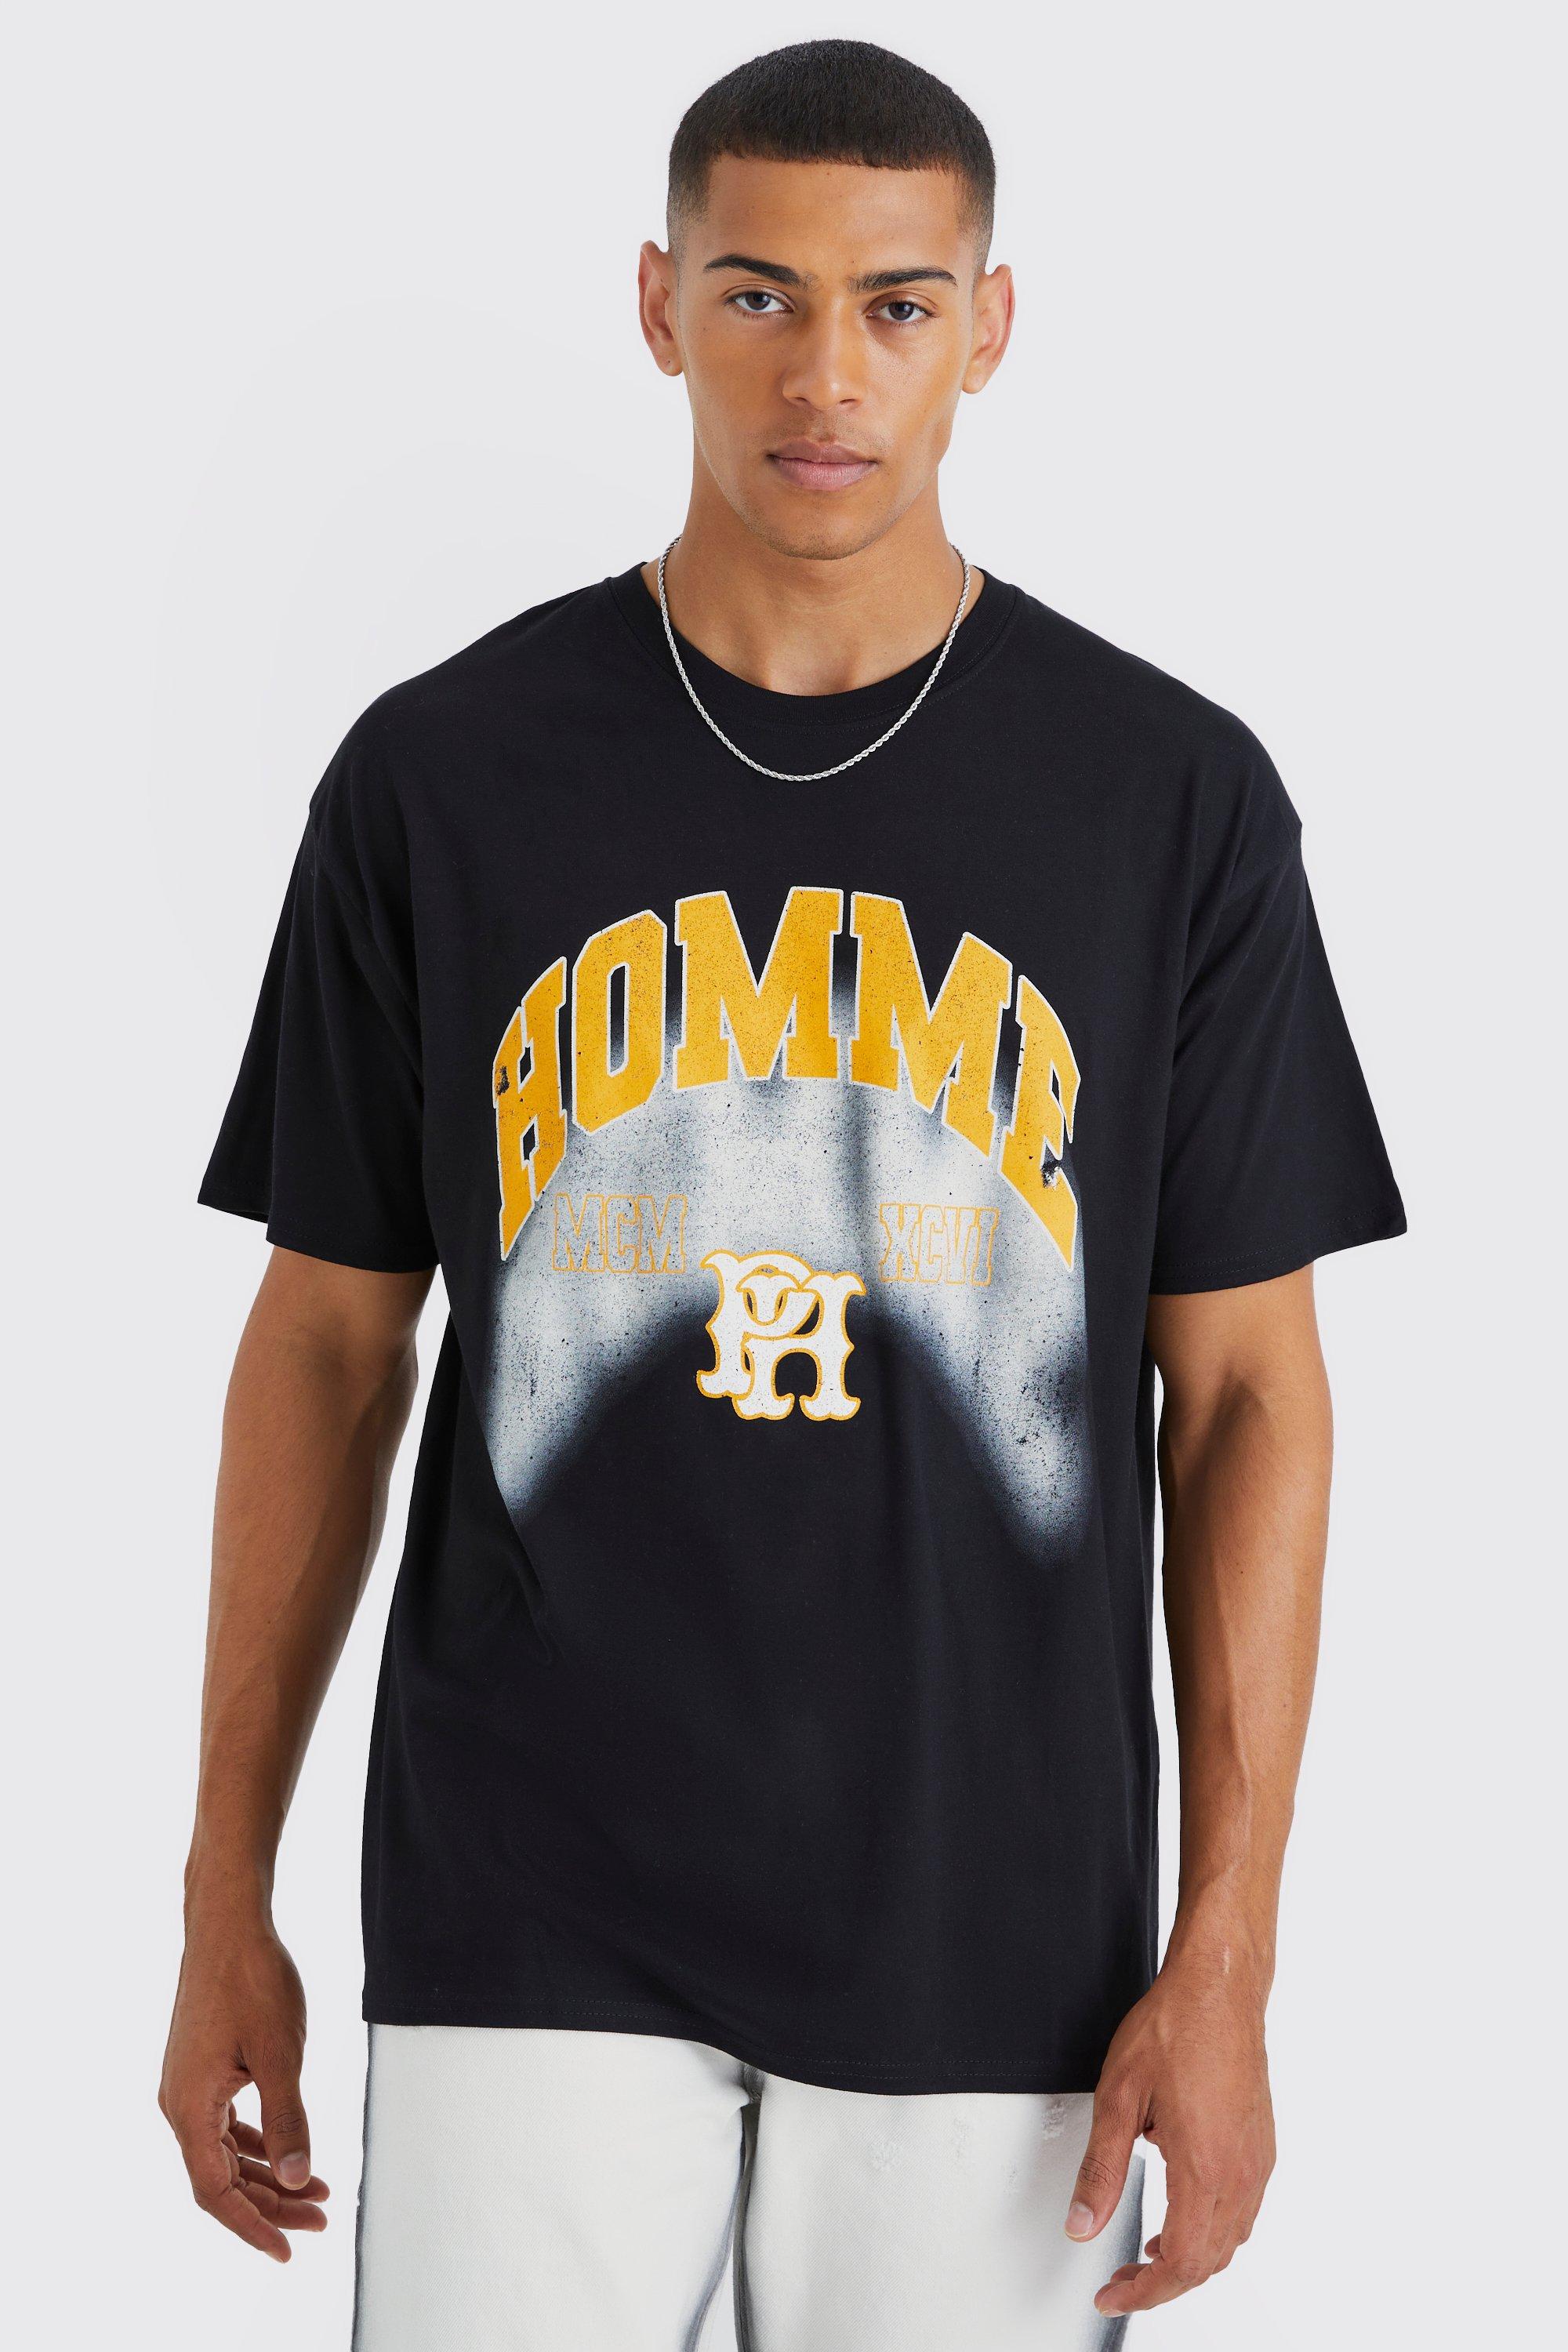 boohoo Mens Oversized La Varsity Graphic T-Shirt - Brown XS